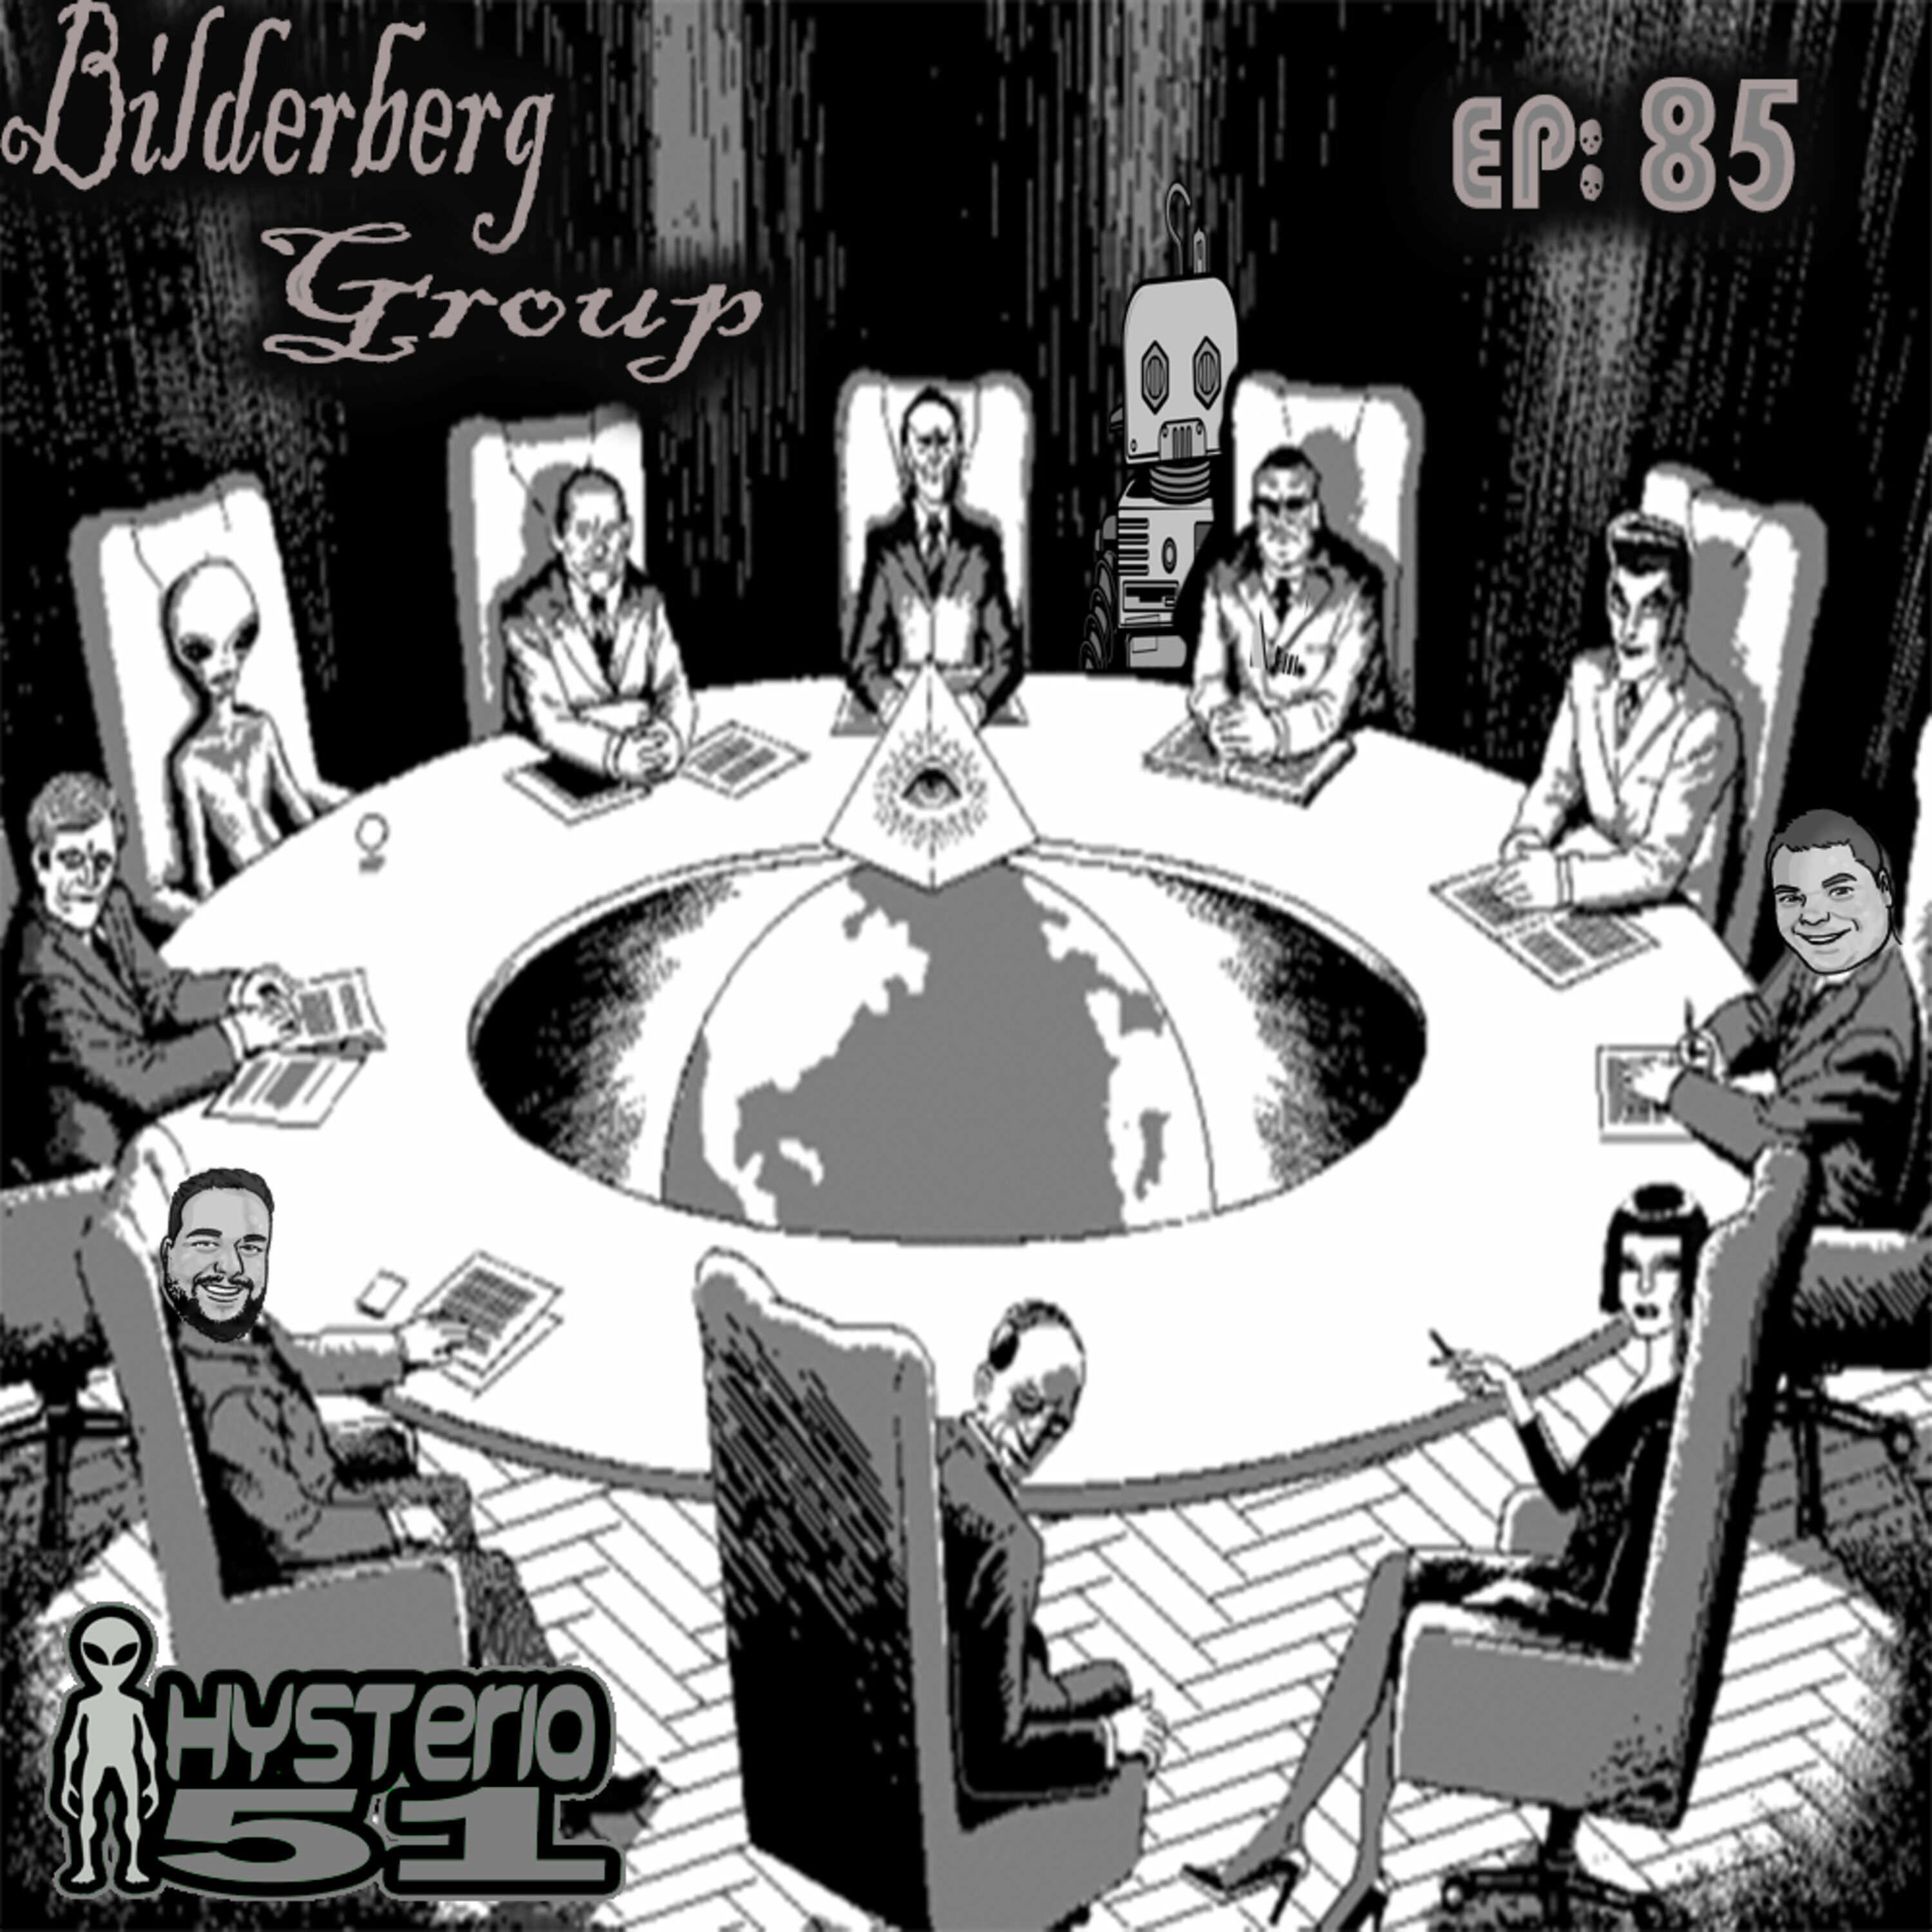 The Bilderberg Group: Philanthropic Forum or Corrupt Cabal Conference? | 85